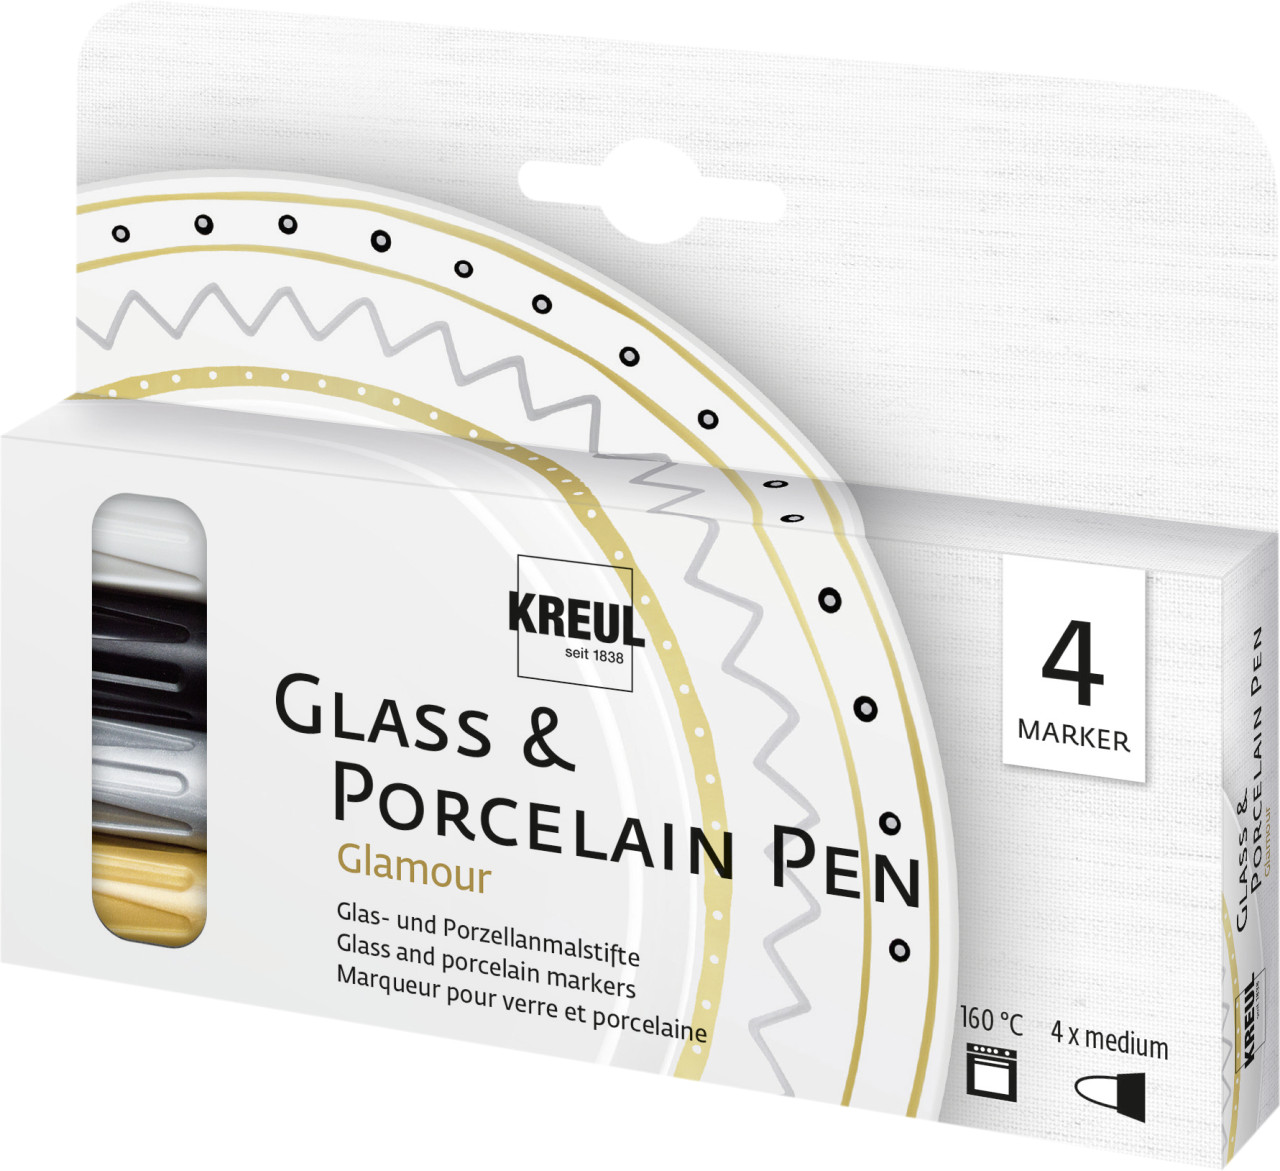 Kreul Glass & Porcelain Pen 4er Set Glamour von Kreul